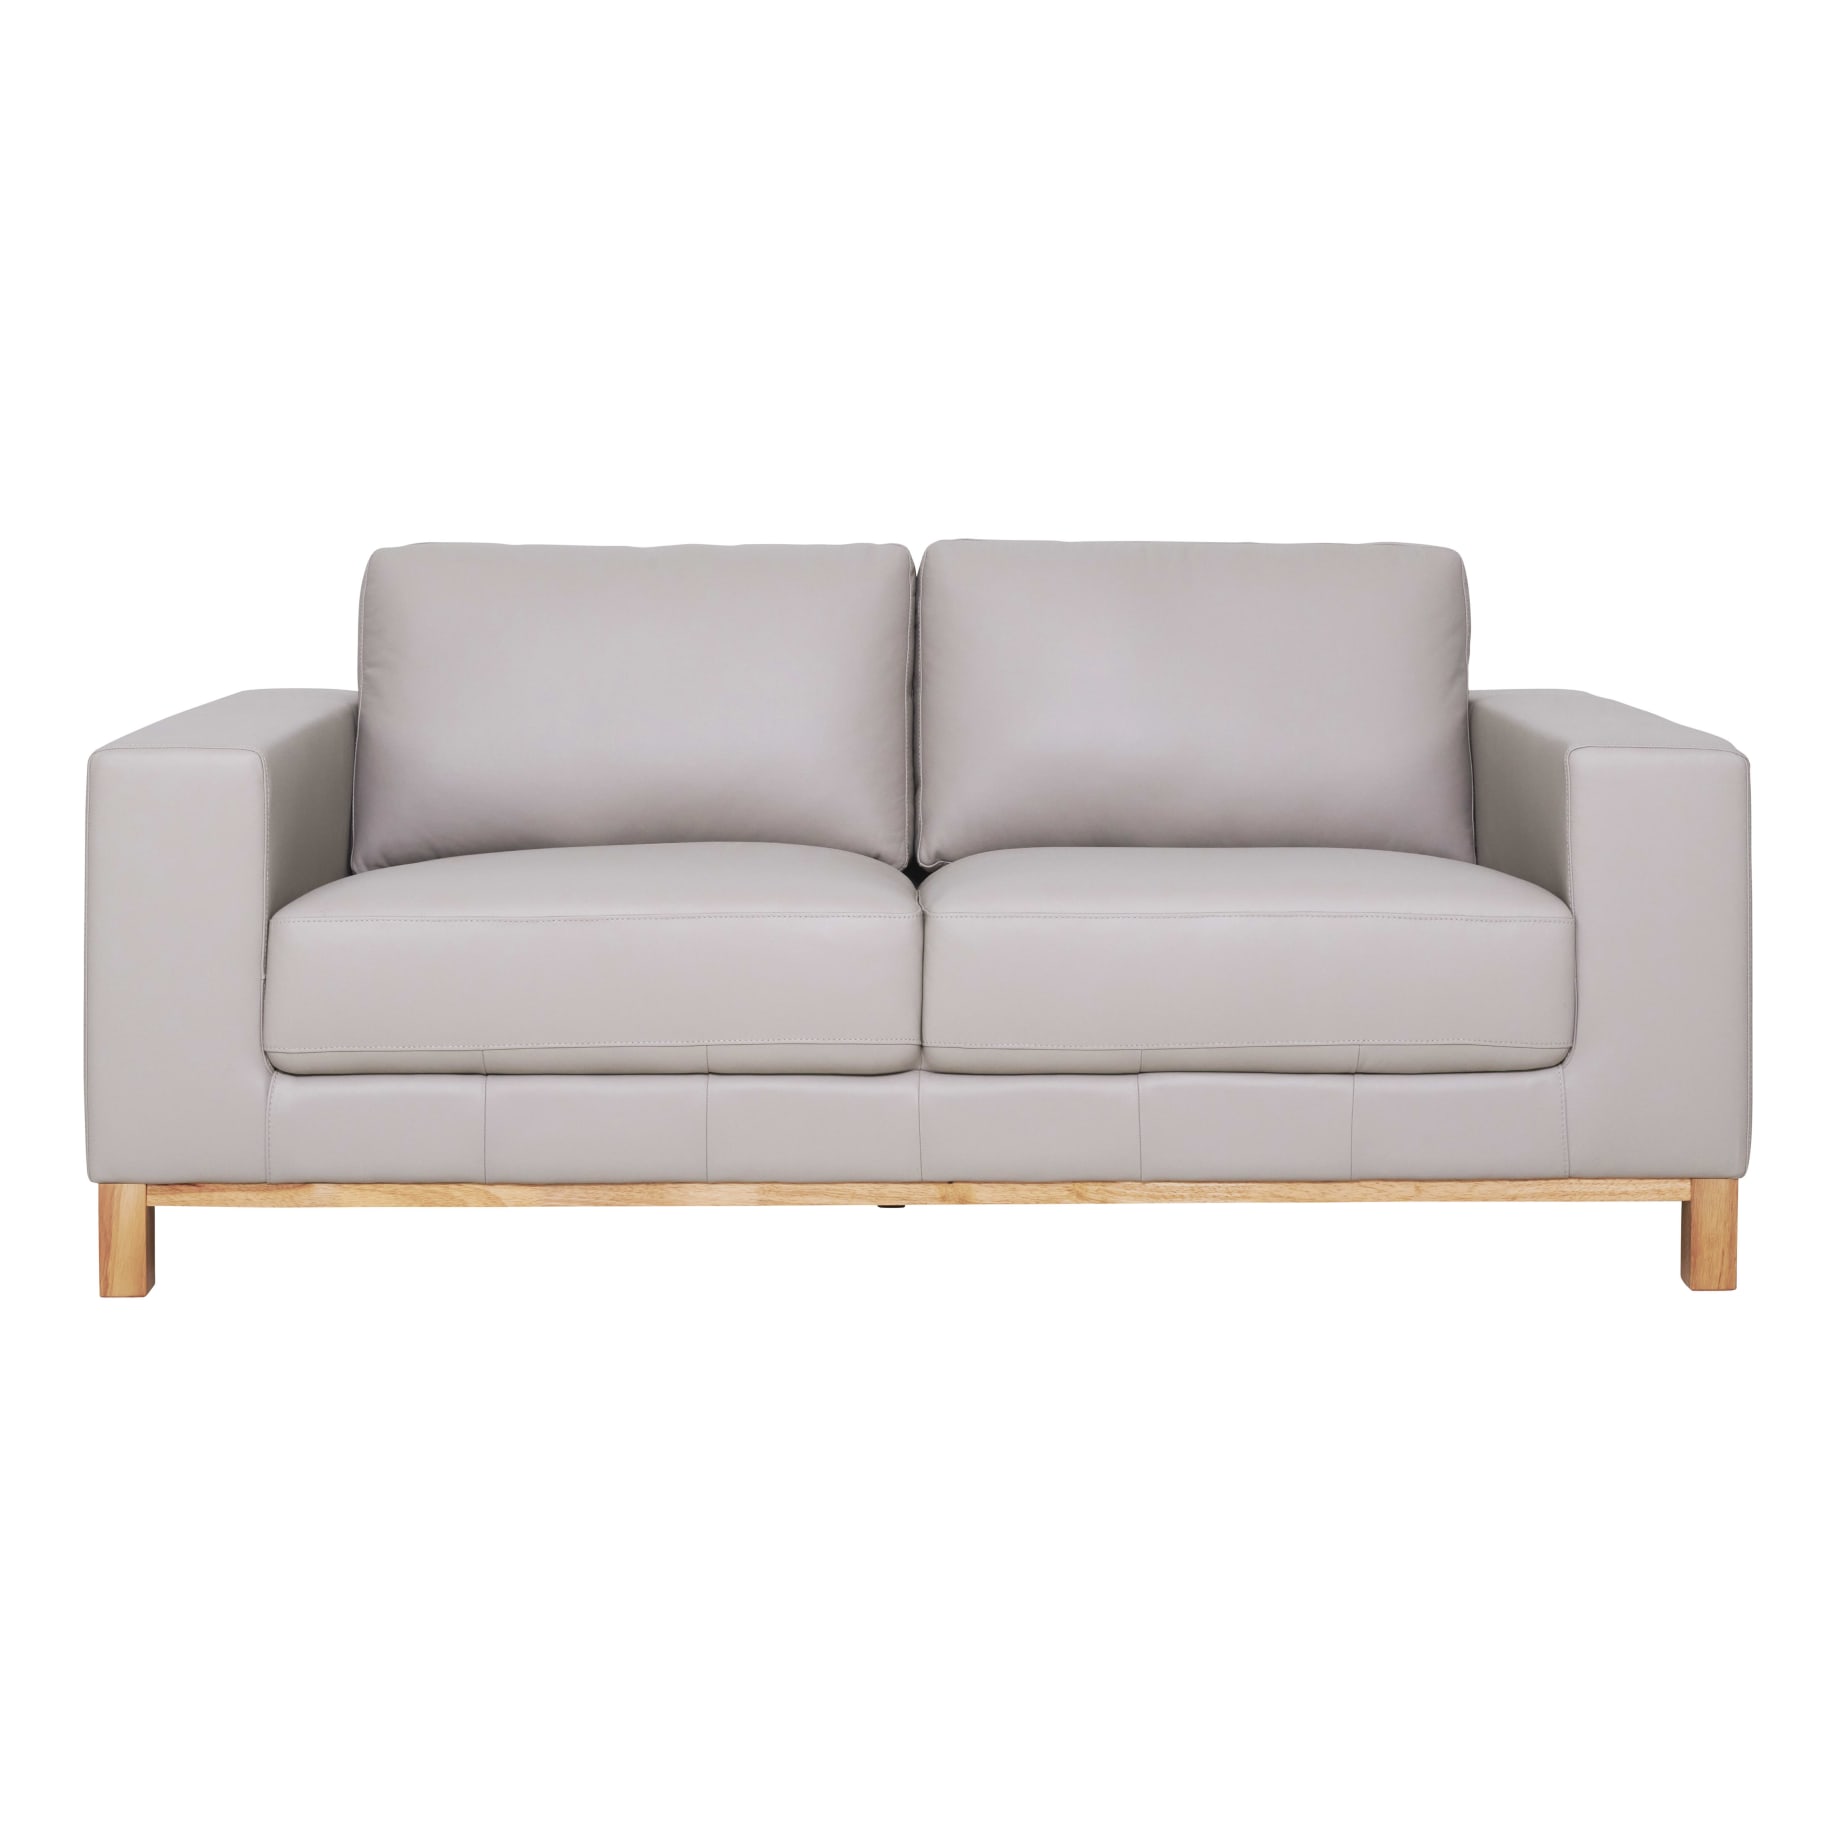 Jasper 2.5 Seater Sofa in Linea Leather Light Grey